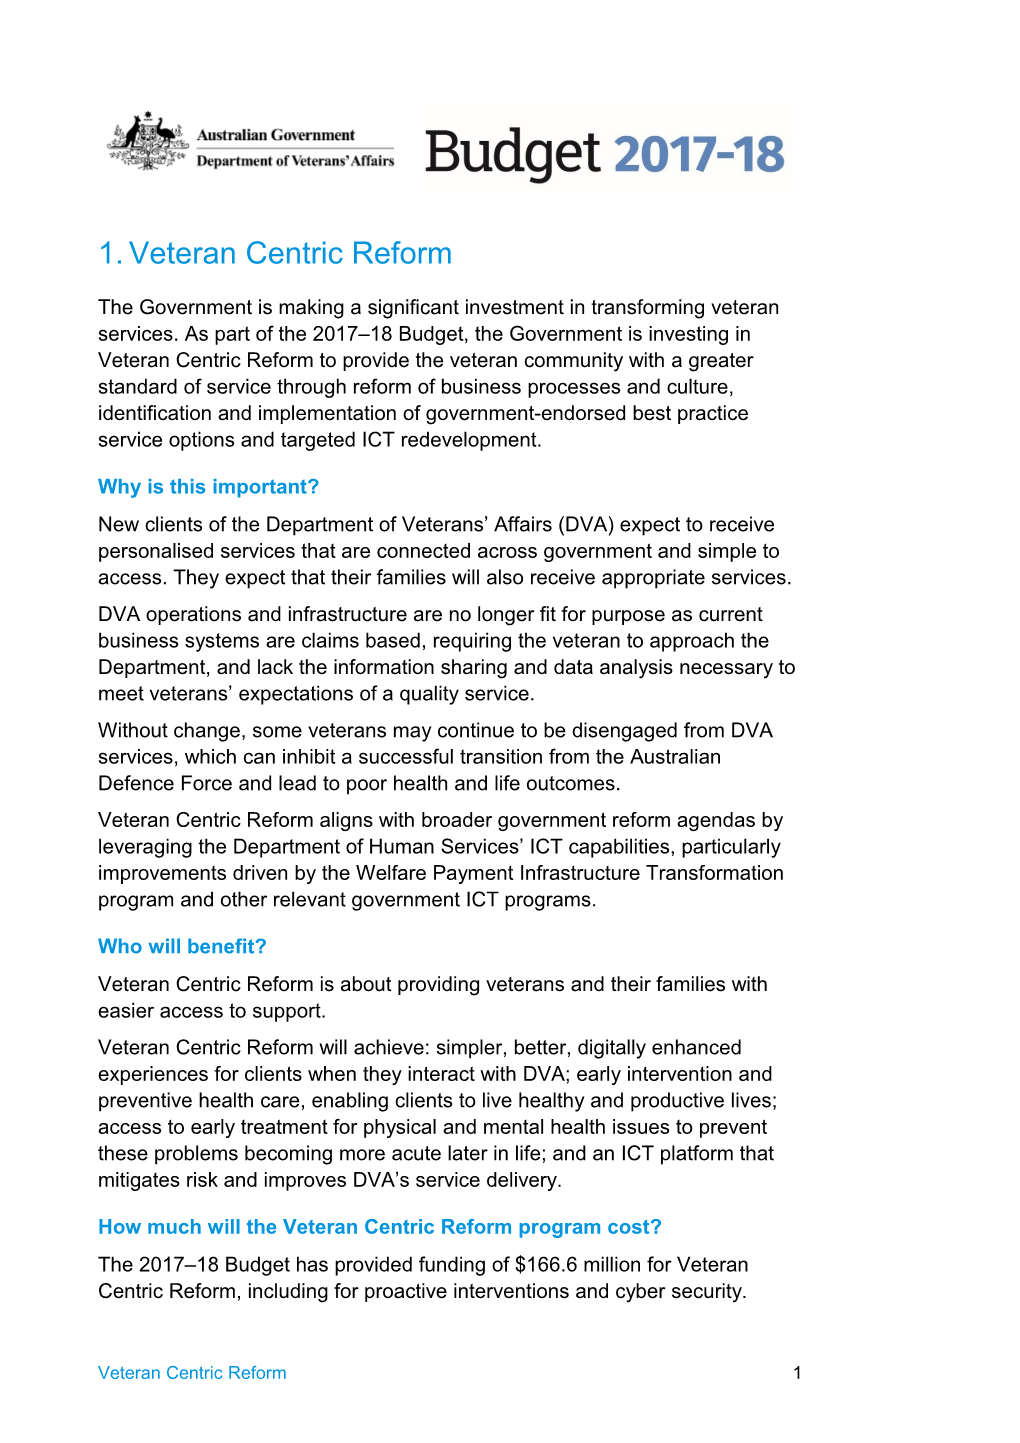 Veteran Centric Reform